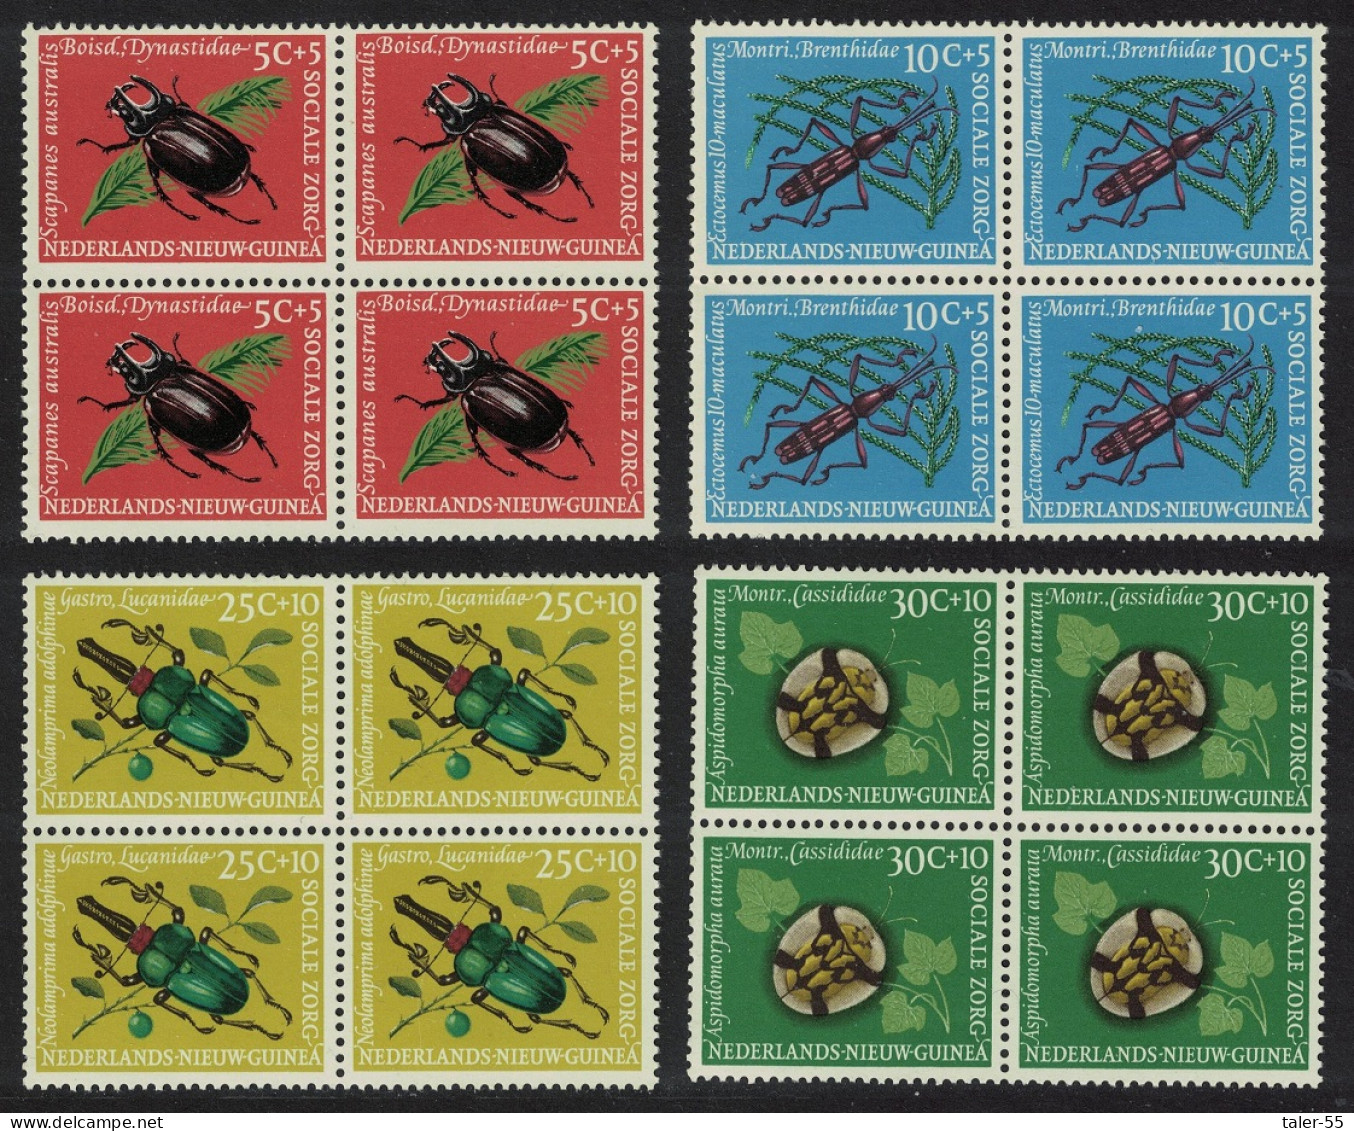 Neth. New Guinea Beetles 4v Blocks Of 4 1961 MNH SG#75-78 - Nueva Guinea Holandesa